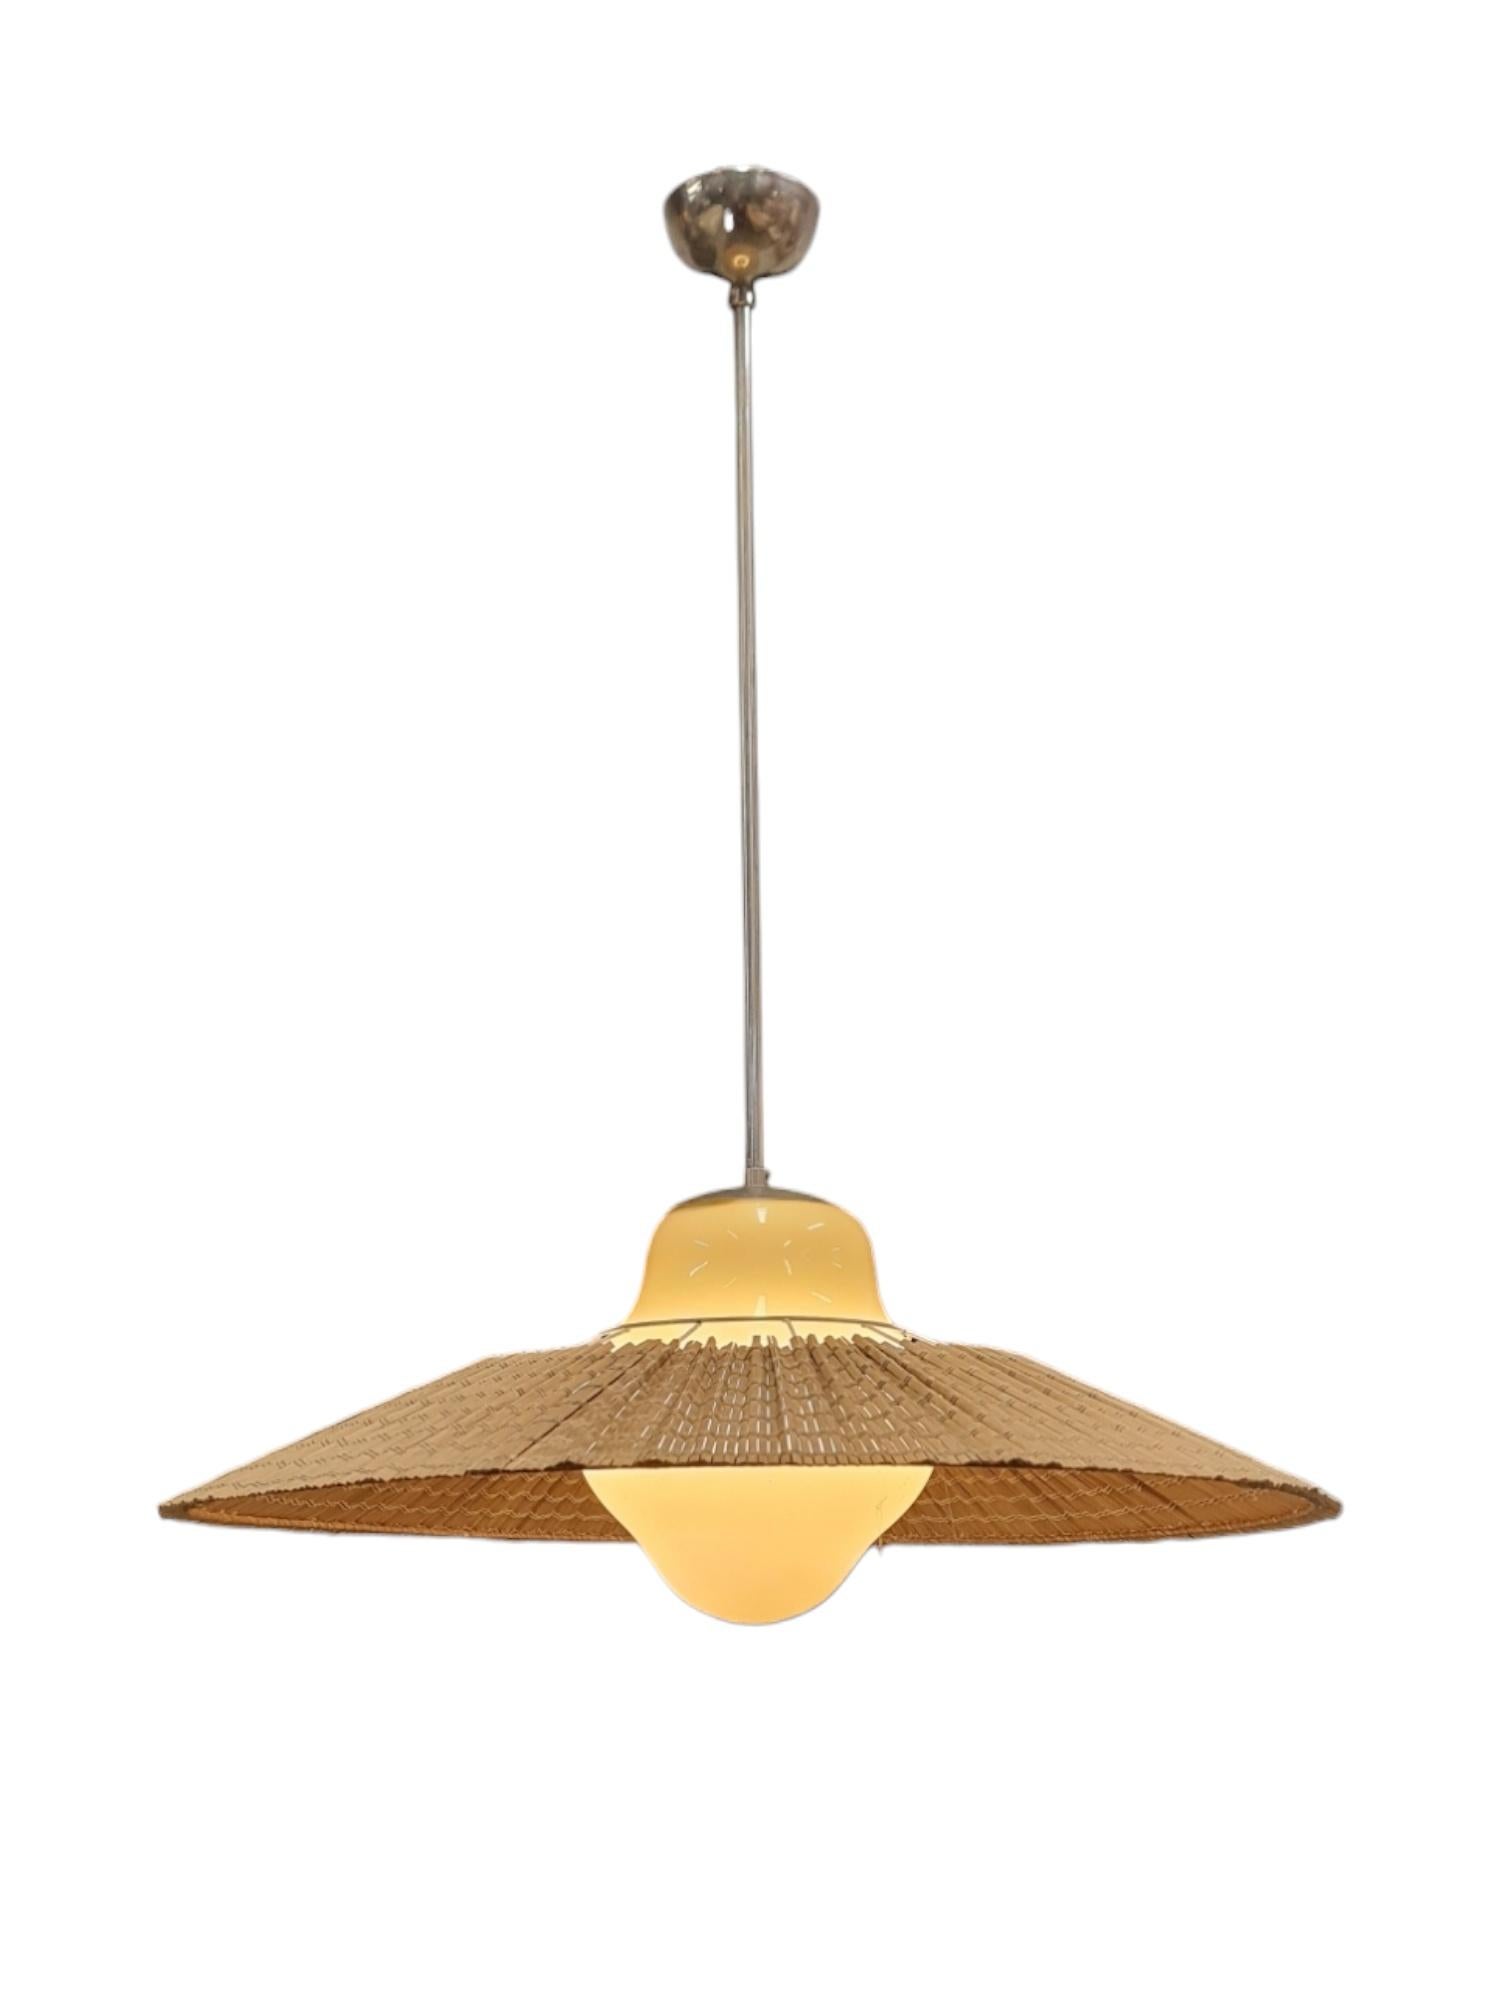 Finnish Lisa Johansson-Papé Ceiling Lamp model 1088, Orno